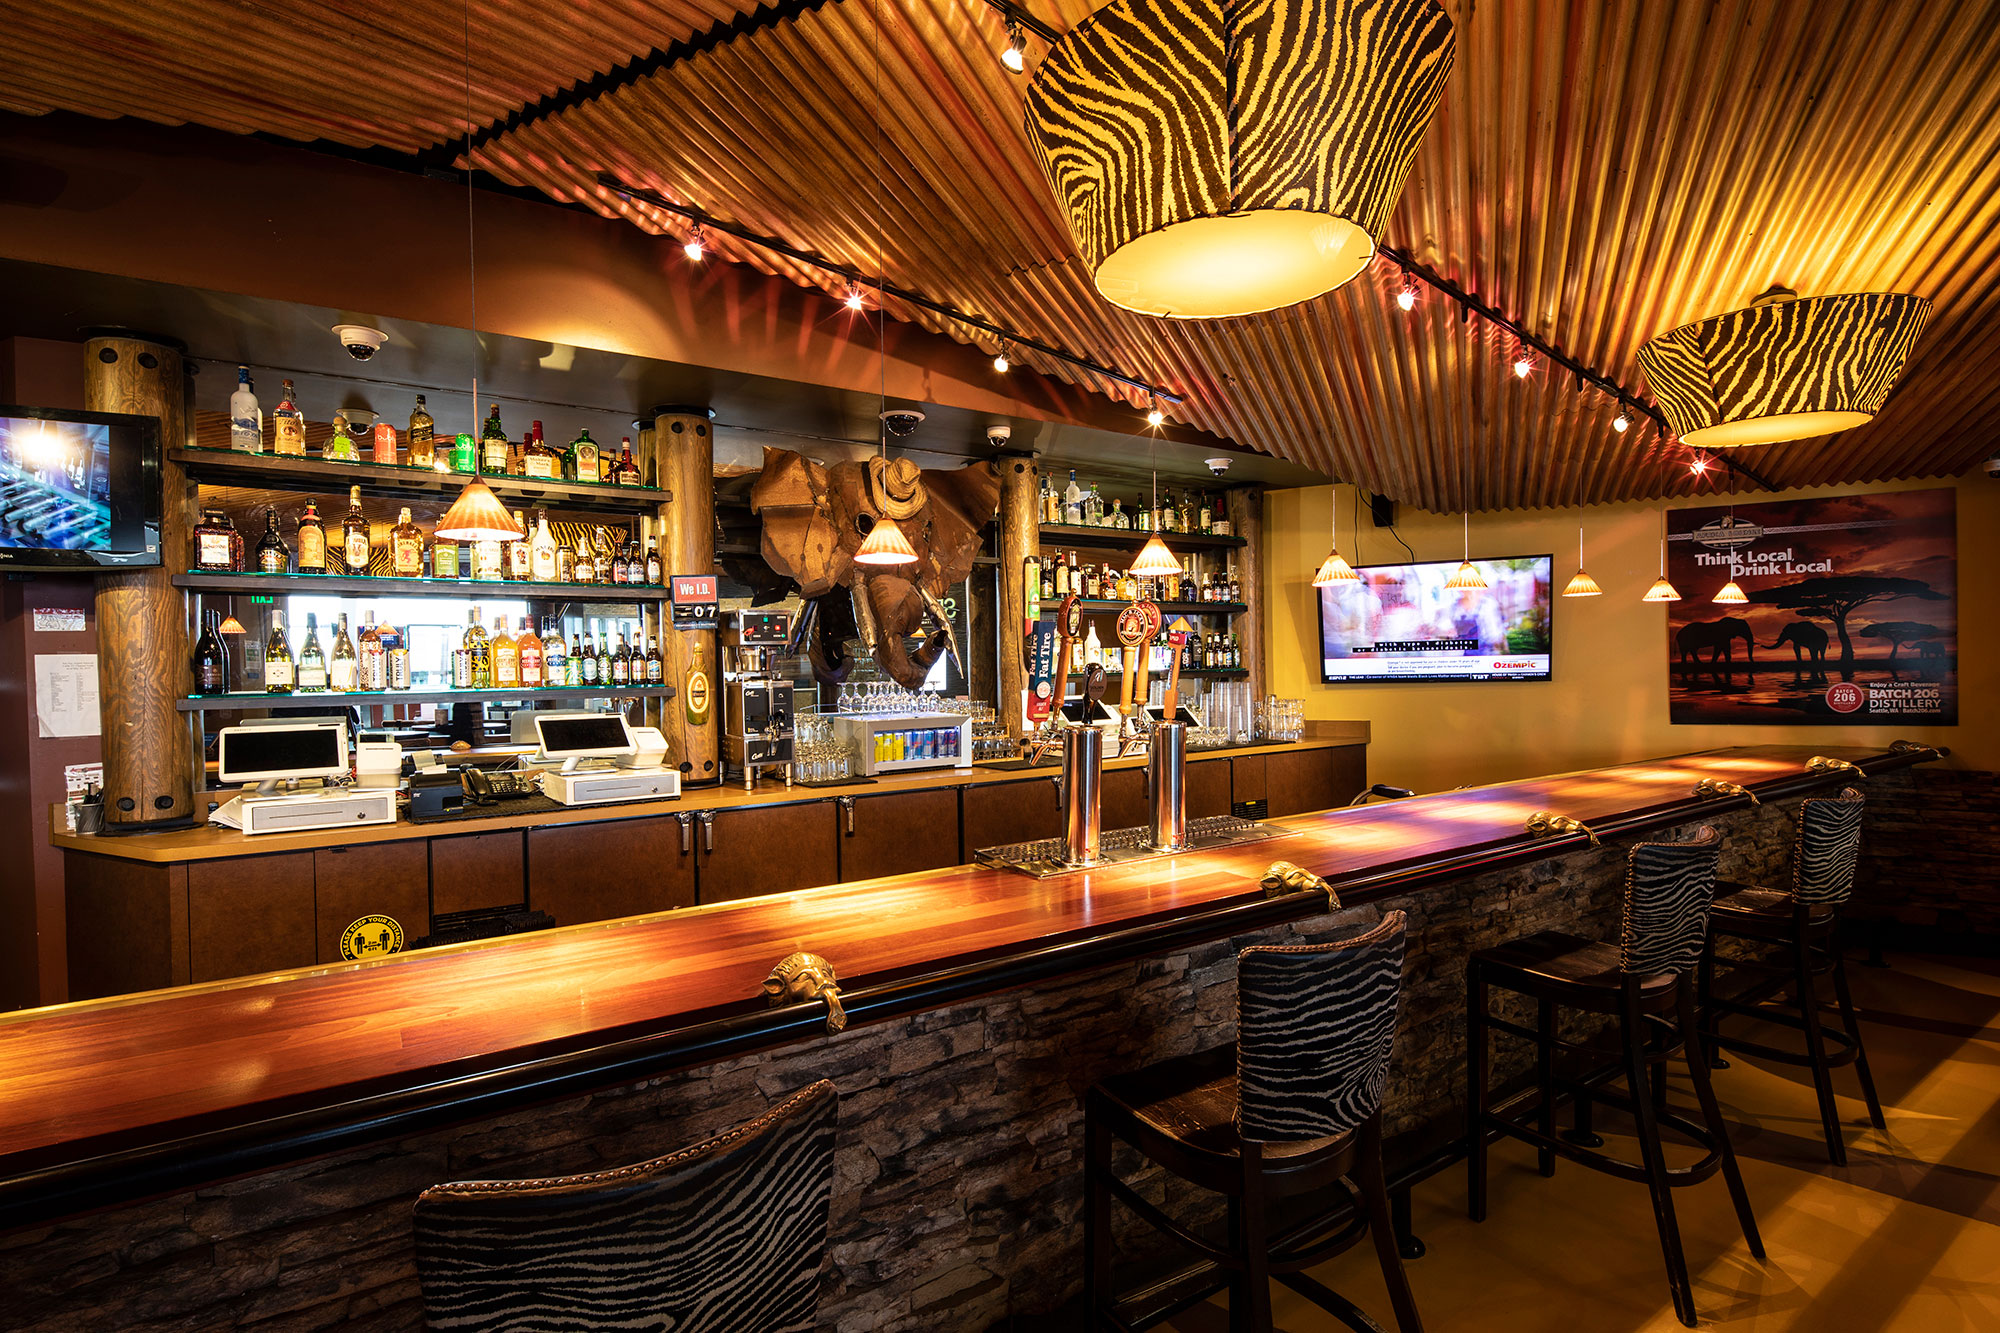 SEA Africa Lounge Interior Bar